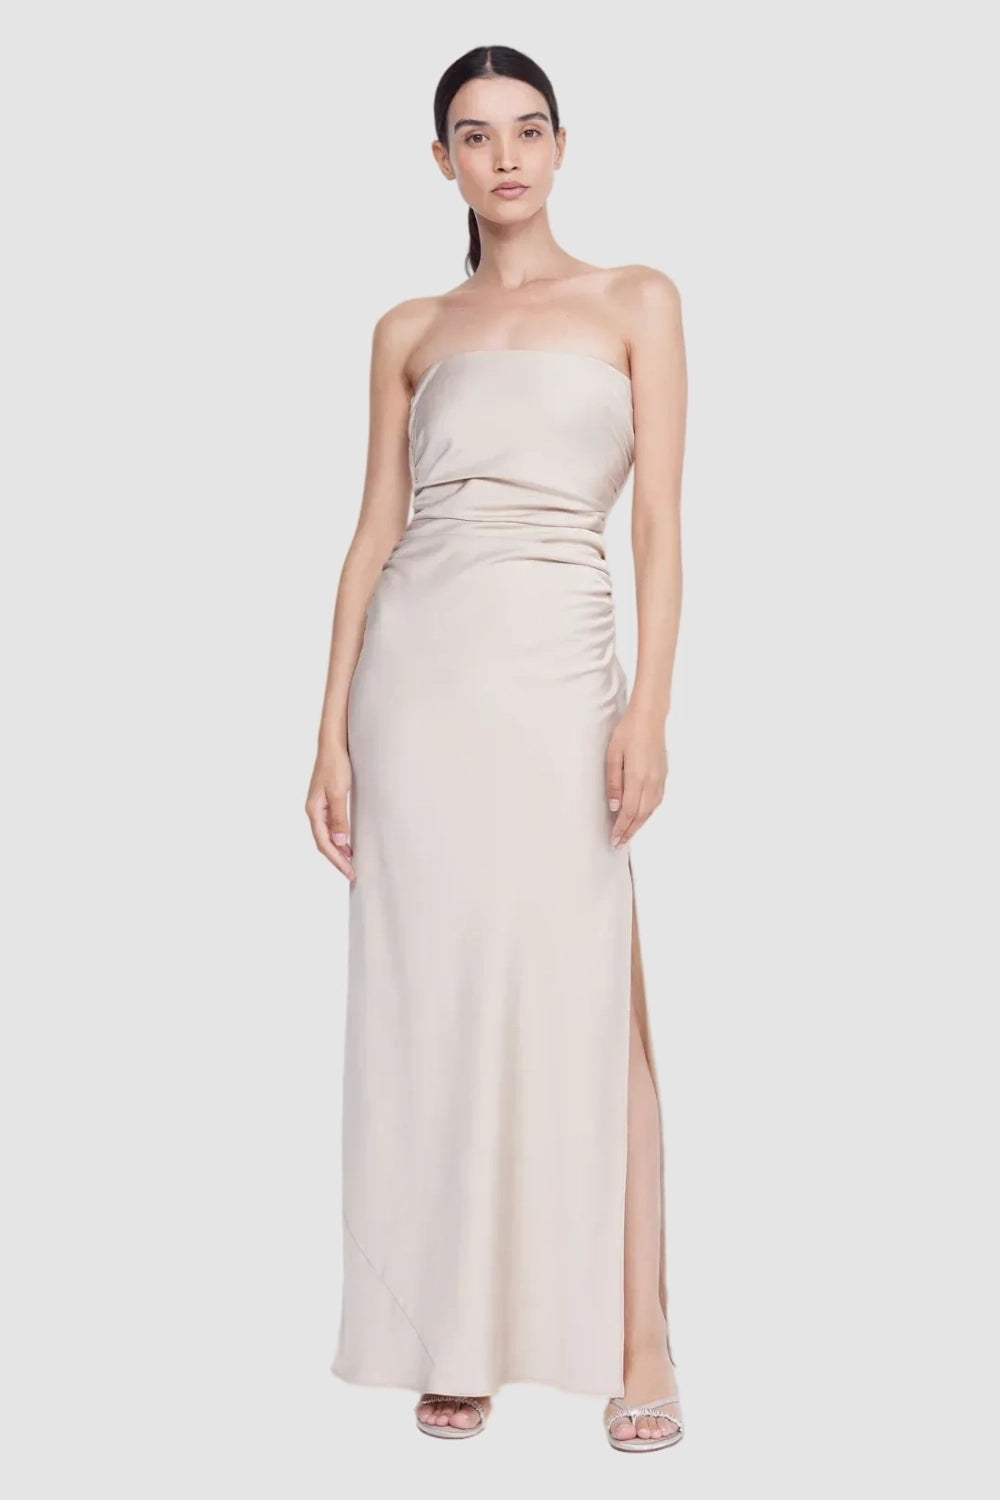 Biome Pearl White Dress